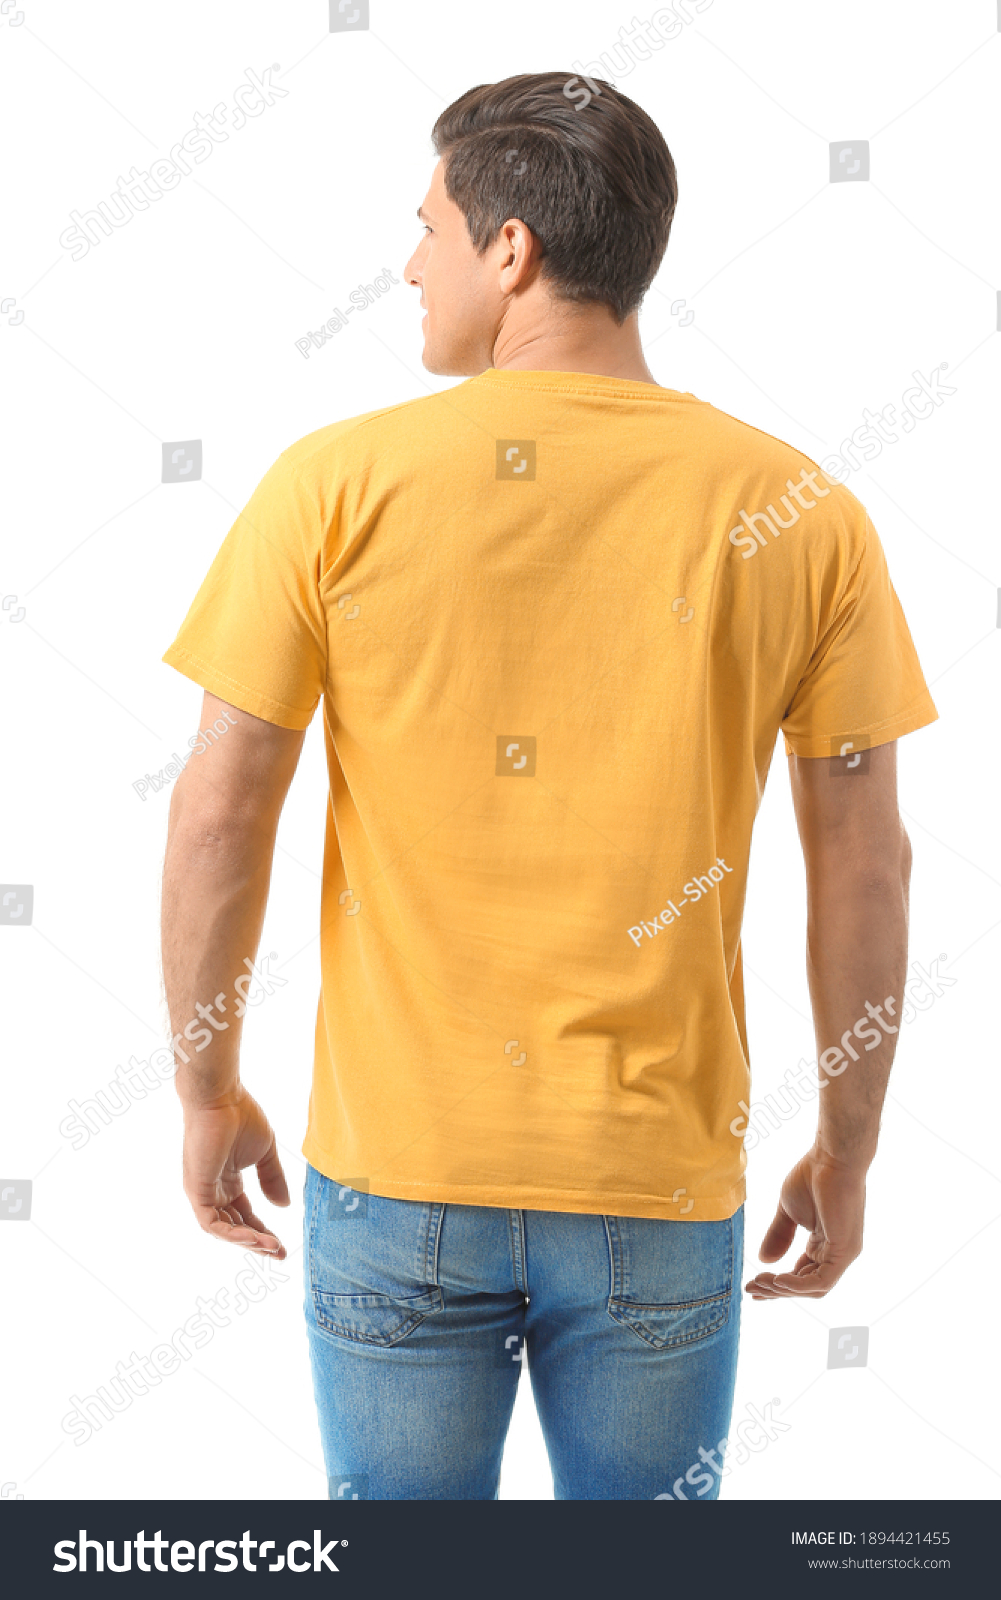 Yellow t-shirt Images, Stock Photos & Vectors | Shutterstock